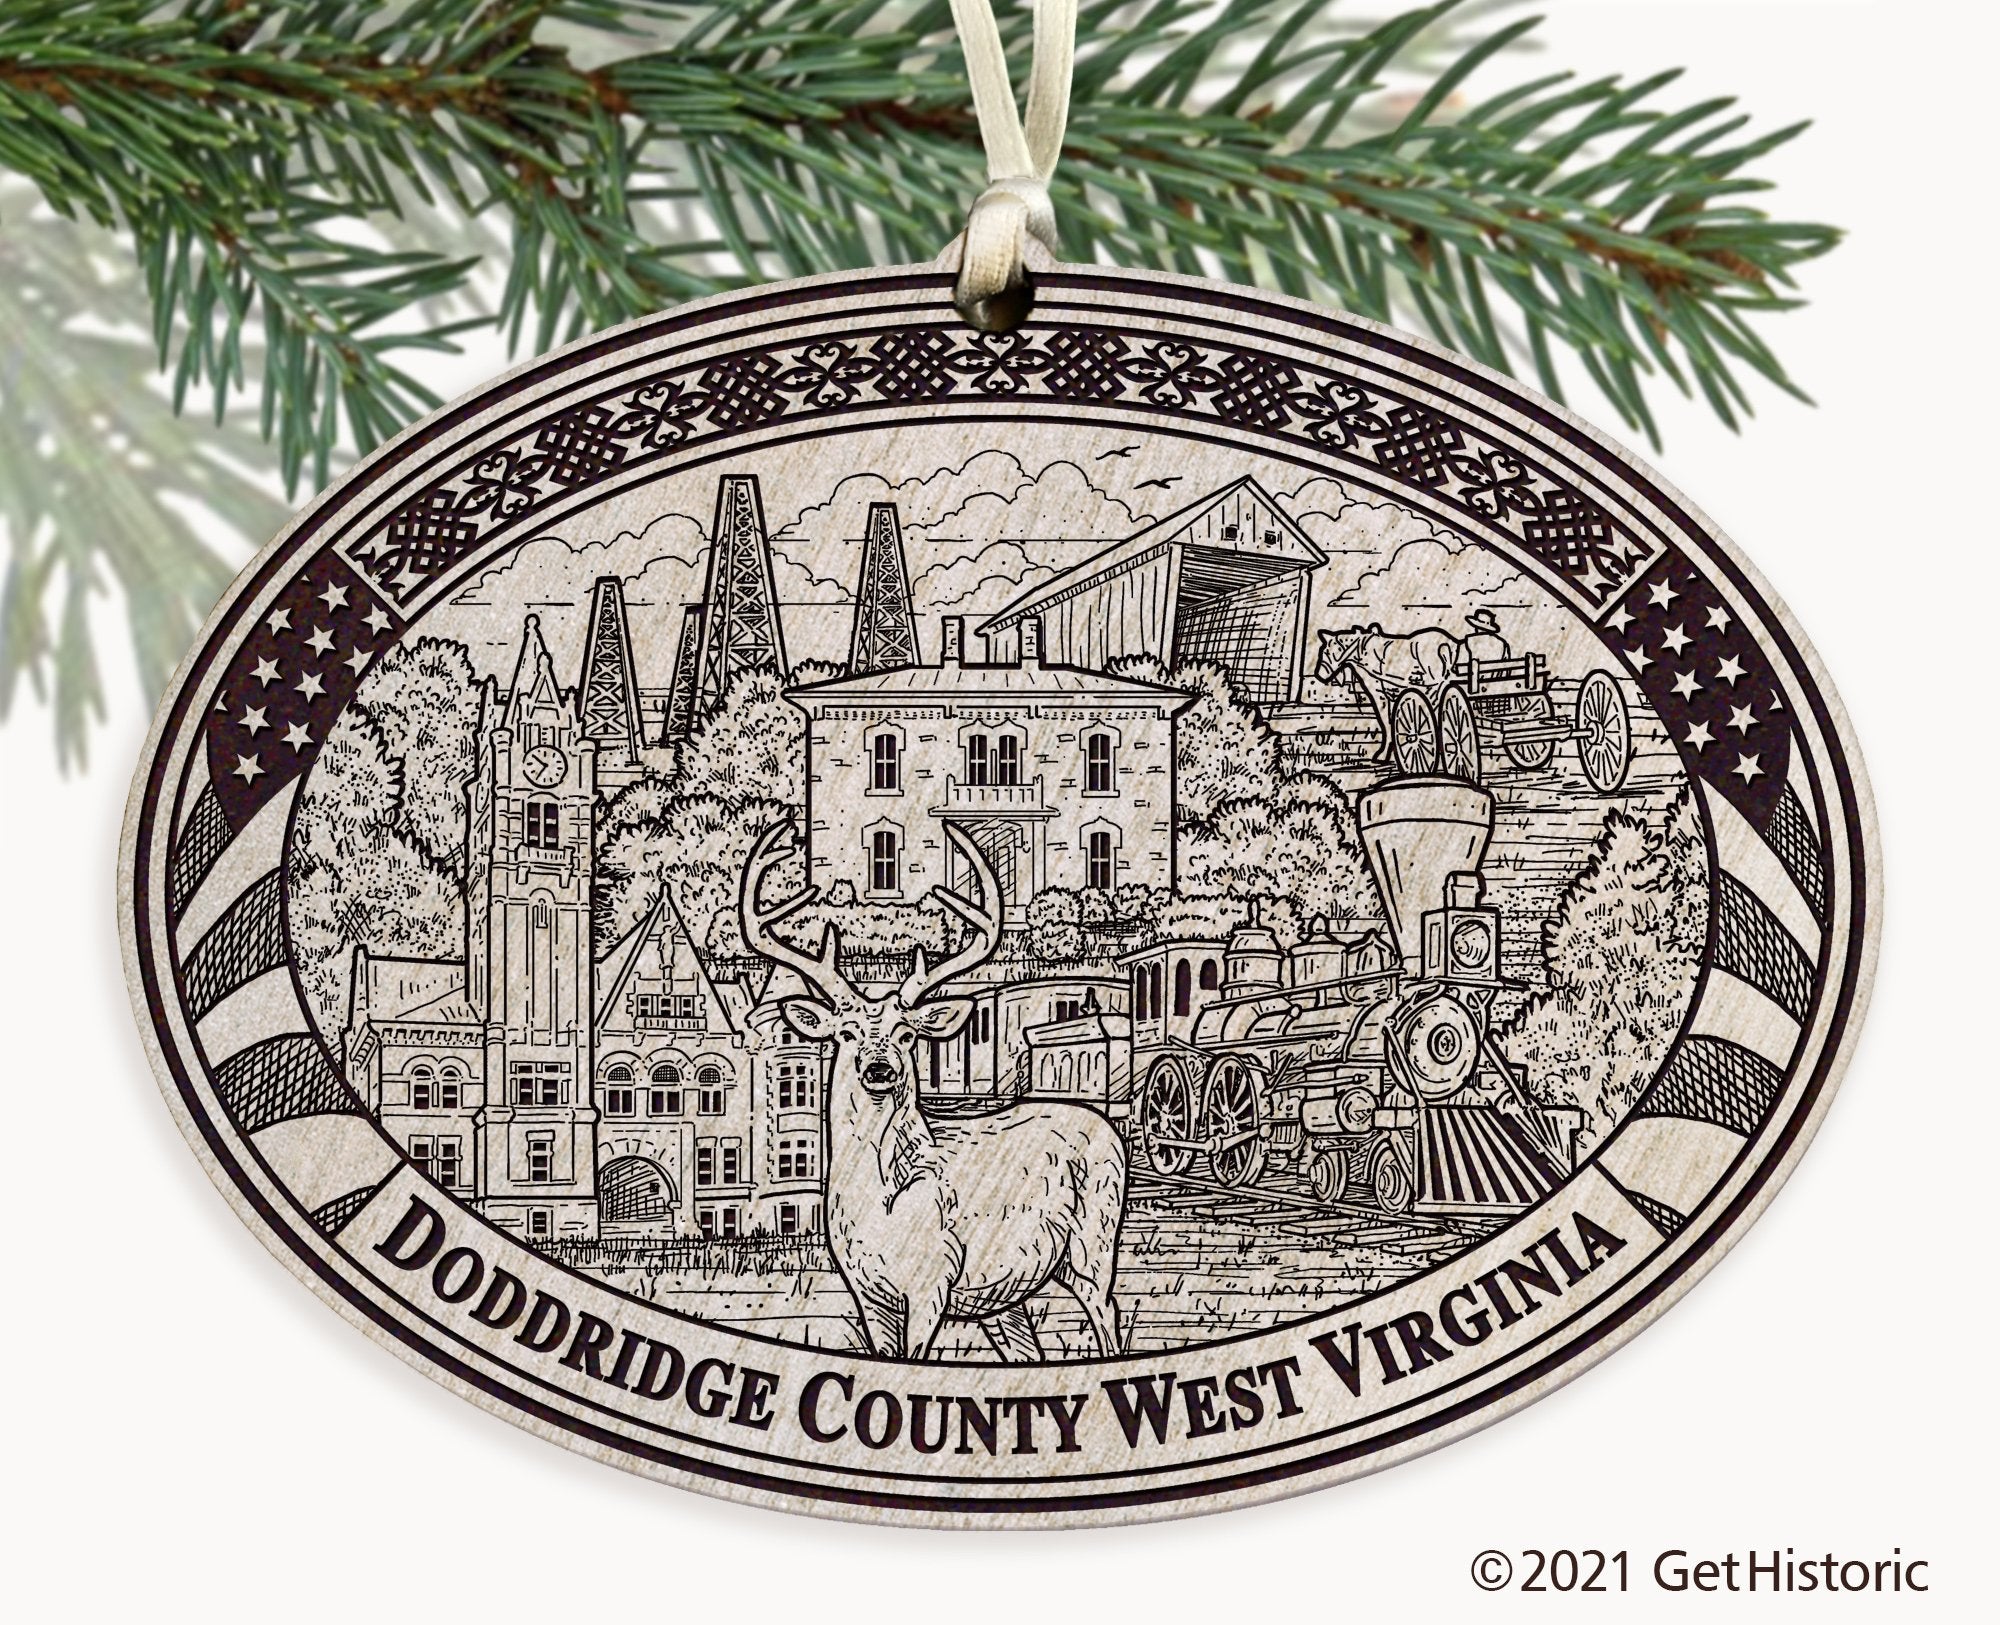 Doddridge County West Virginia Engraved Ornament